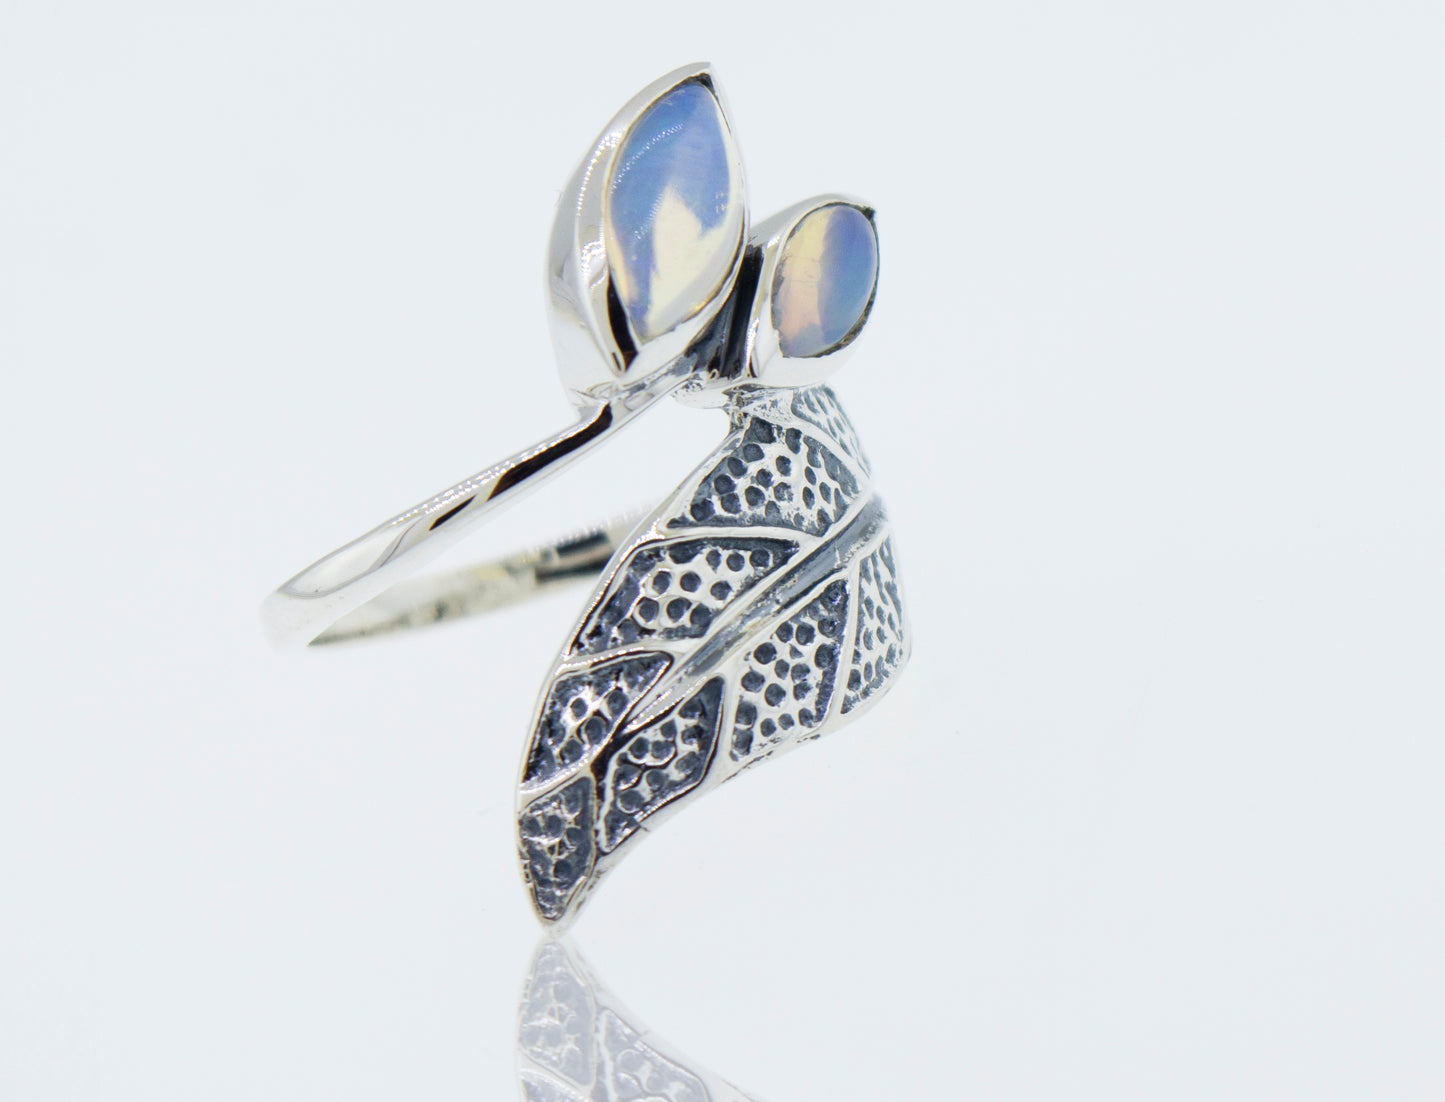 A Super Silver Leaf Ring with Ethiopian Opal.